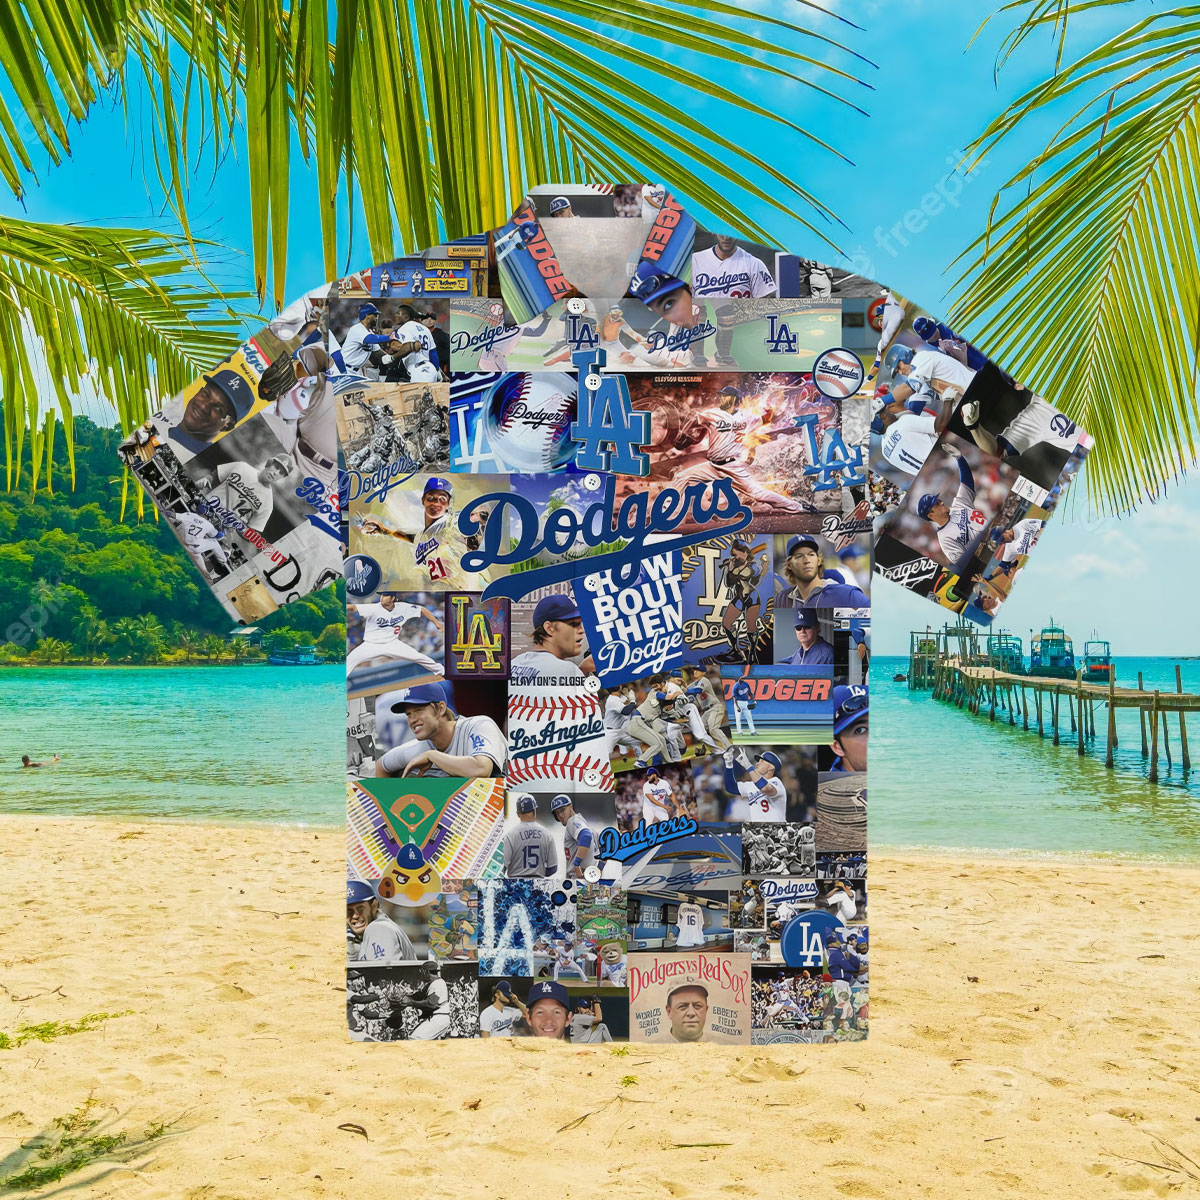 Dodgers All Over Print 3D Hawaiian Shirt - Lelemoon